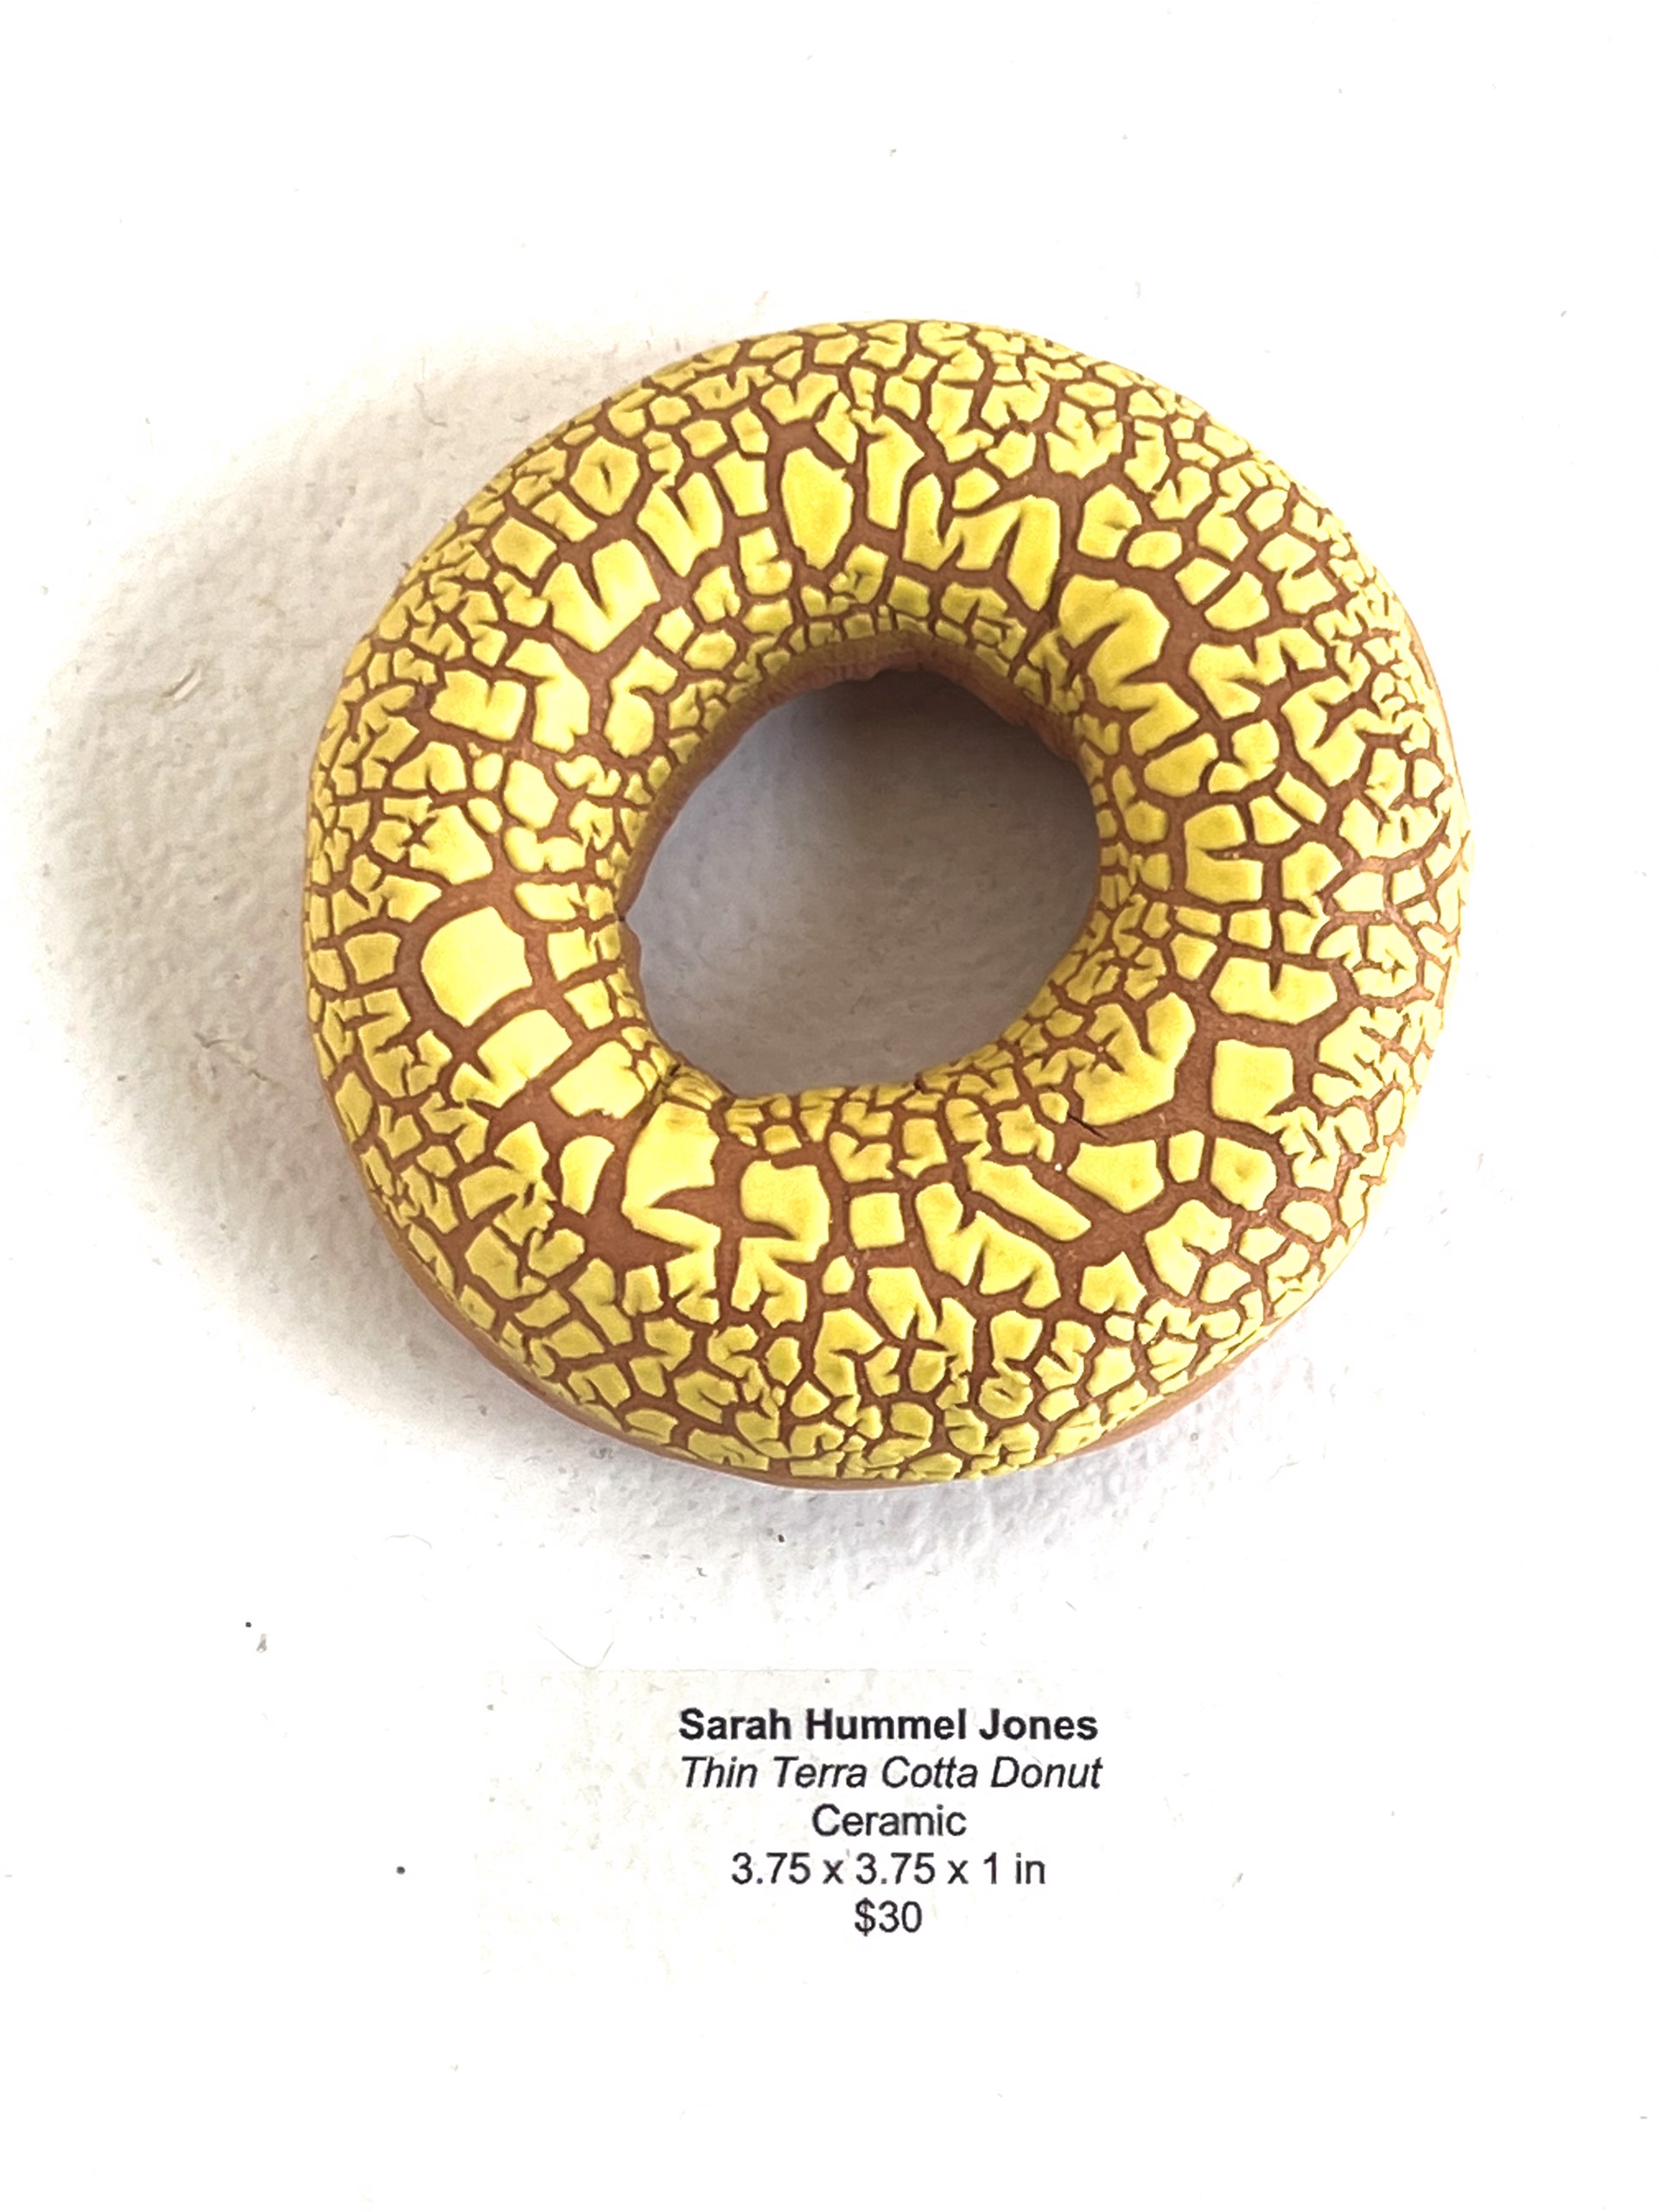 Thin Terra Cotta Donut by Sarah Hummel Jones